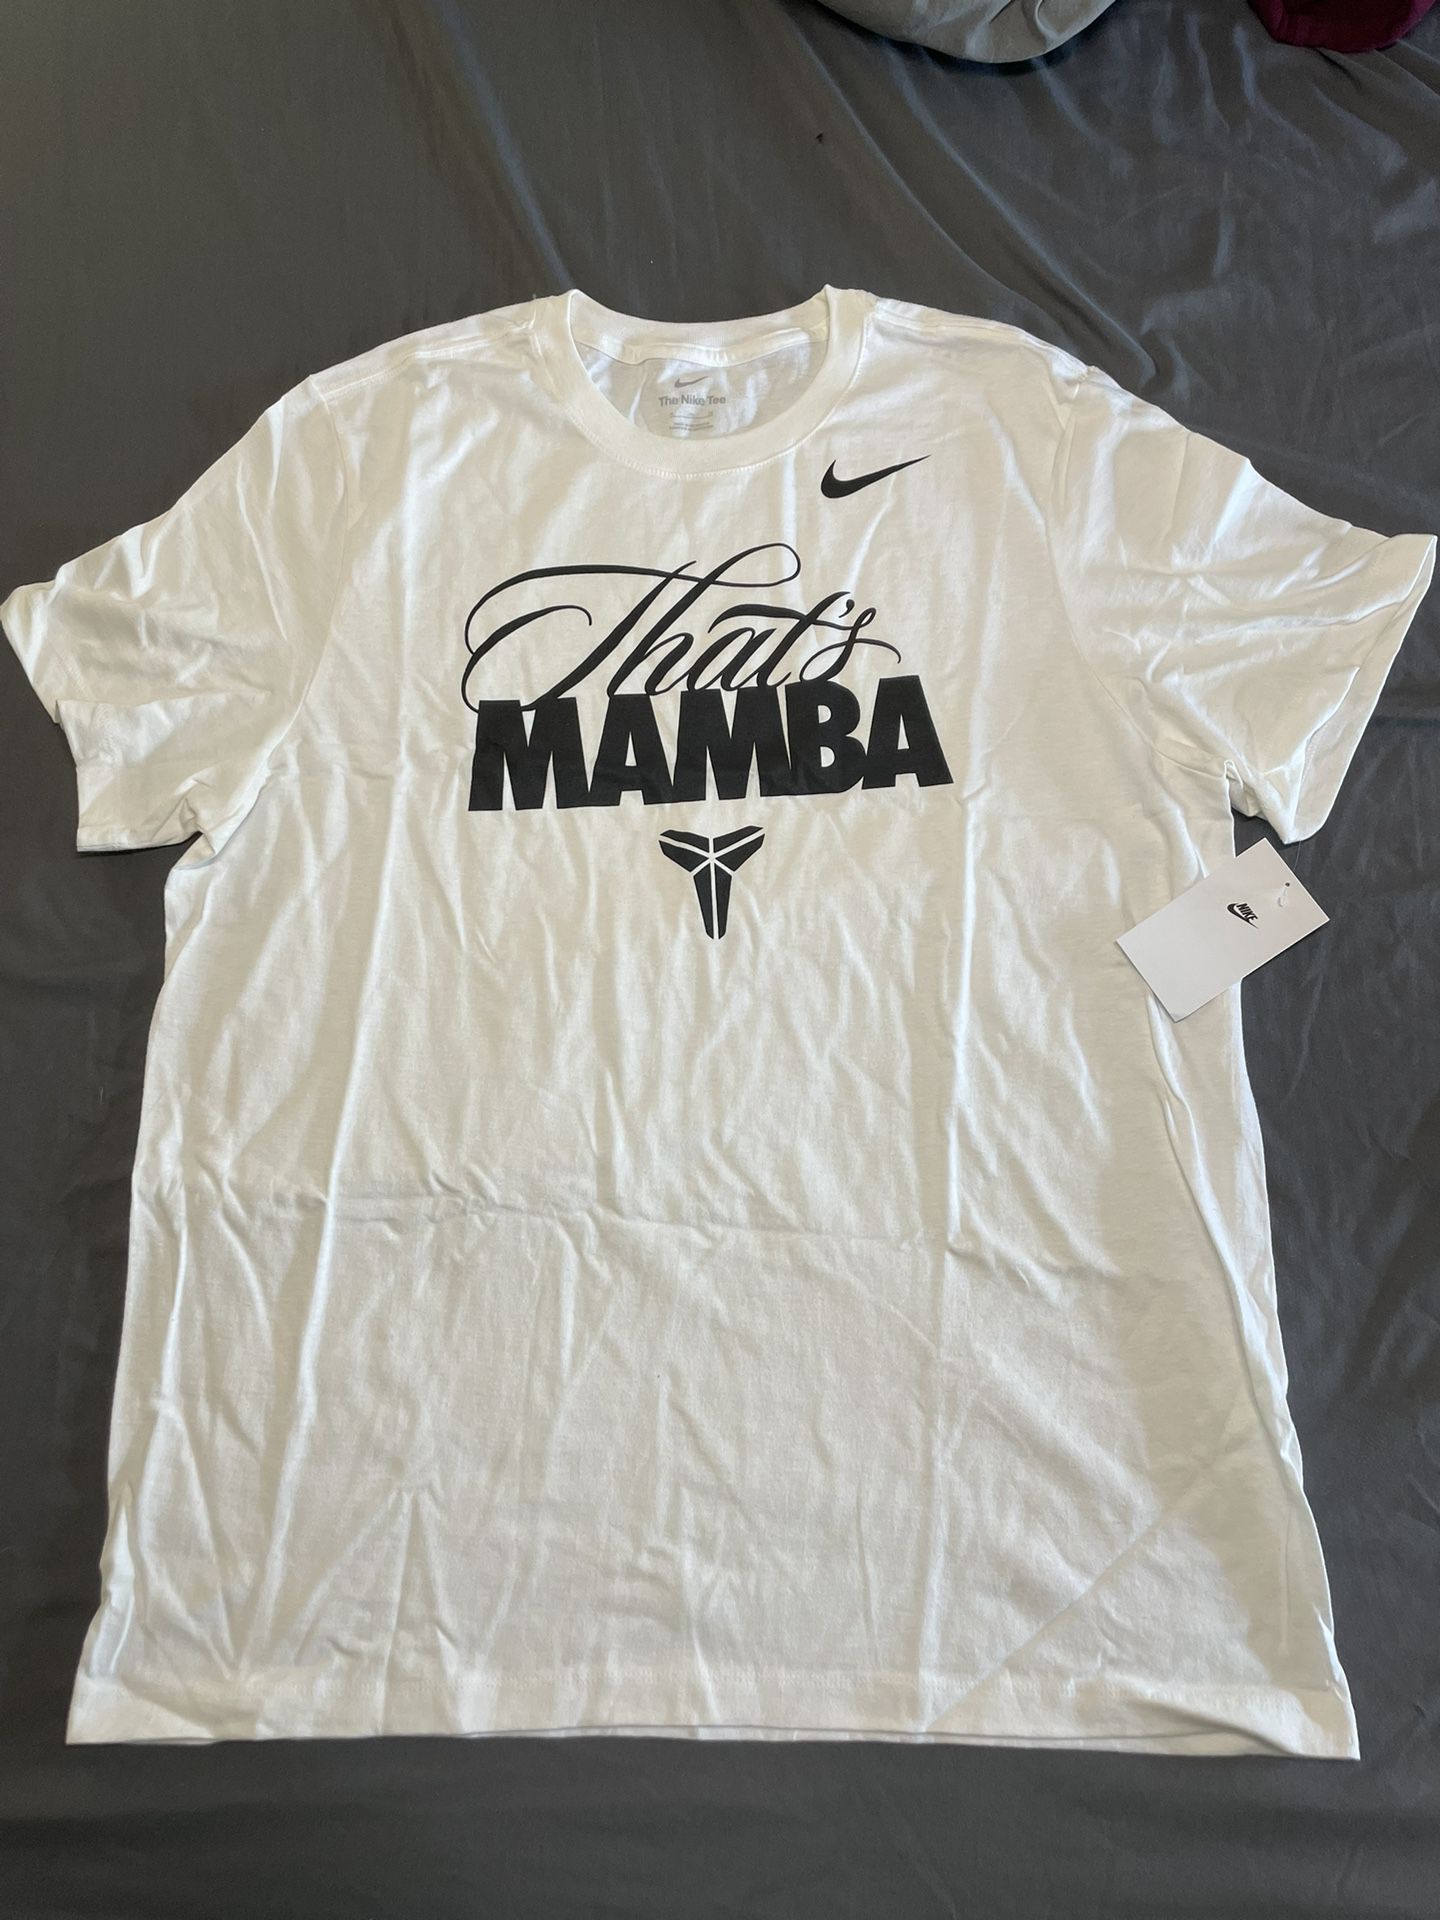 Kobe That’s mamba White T Size XL